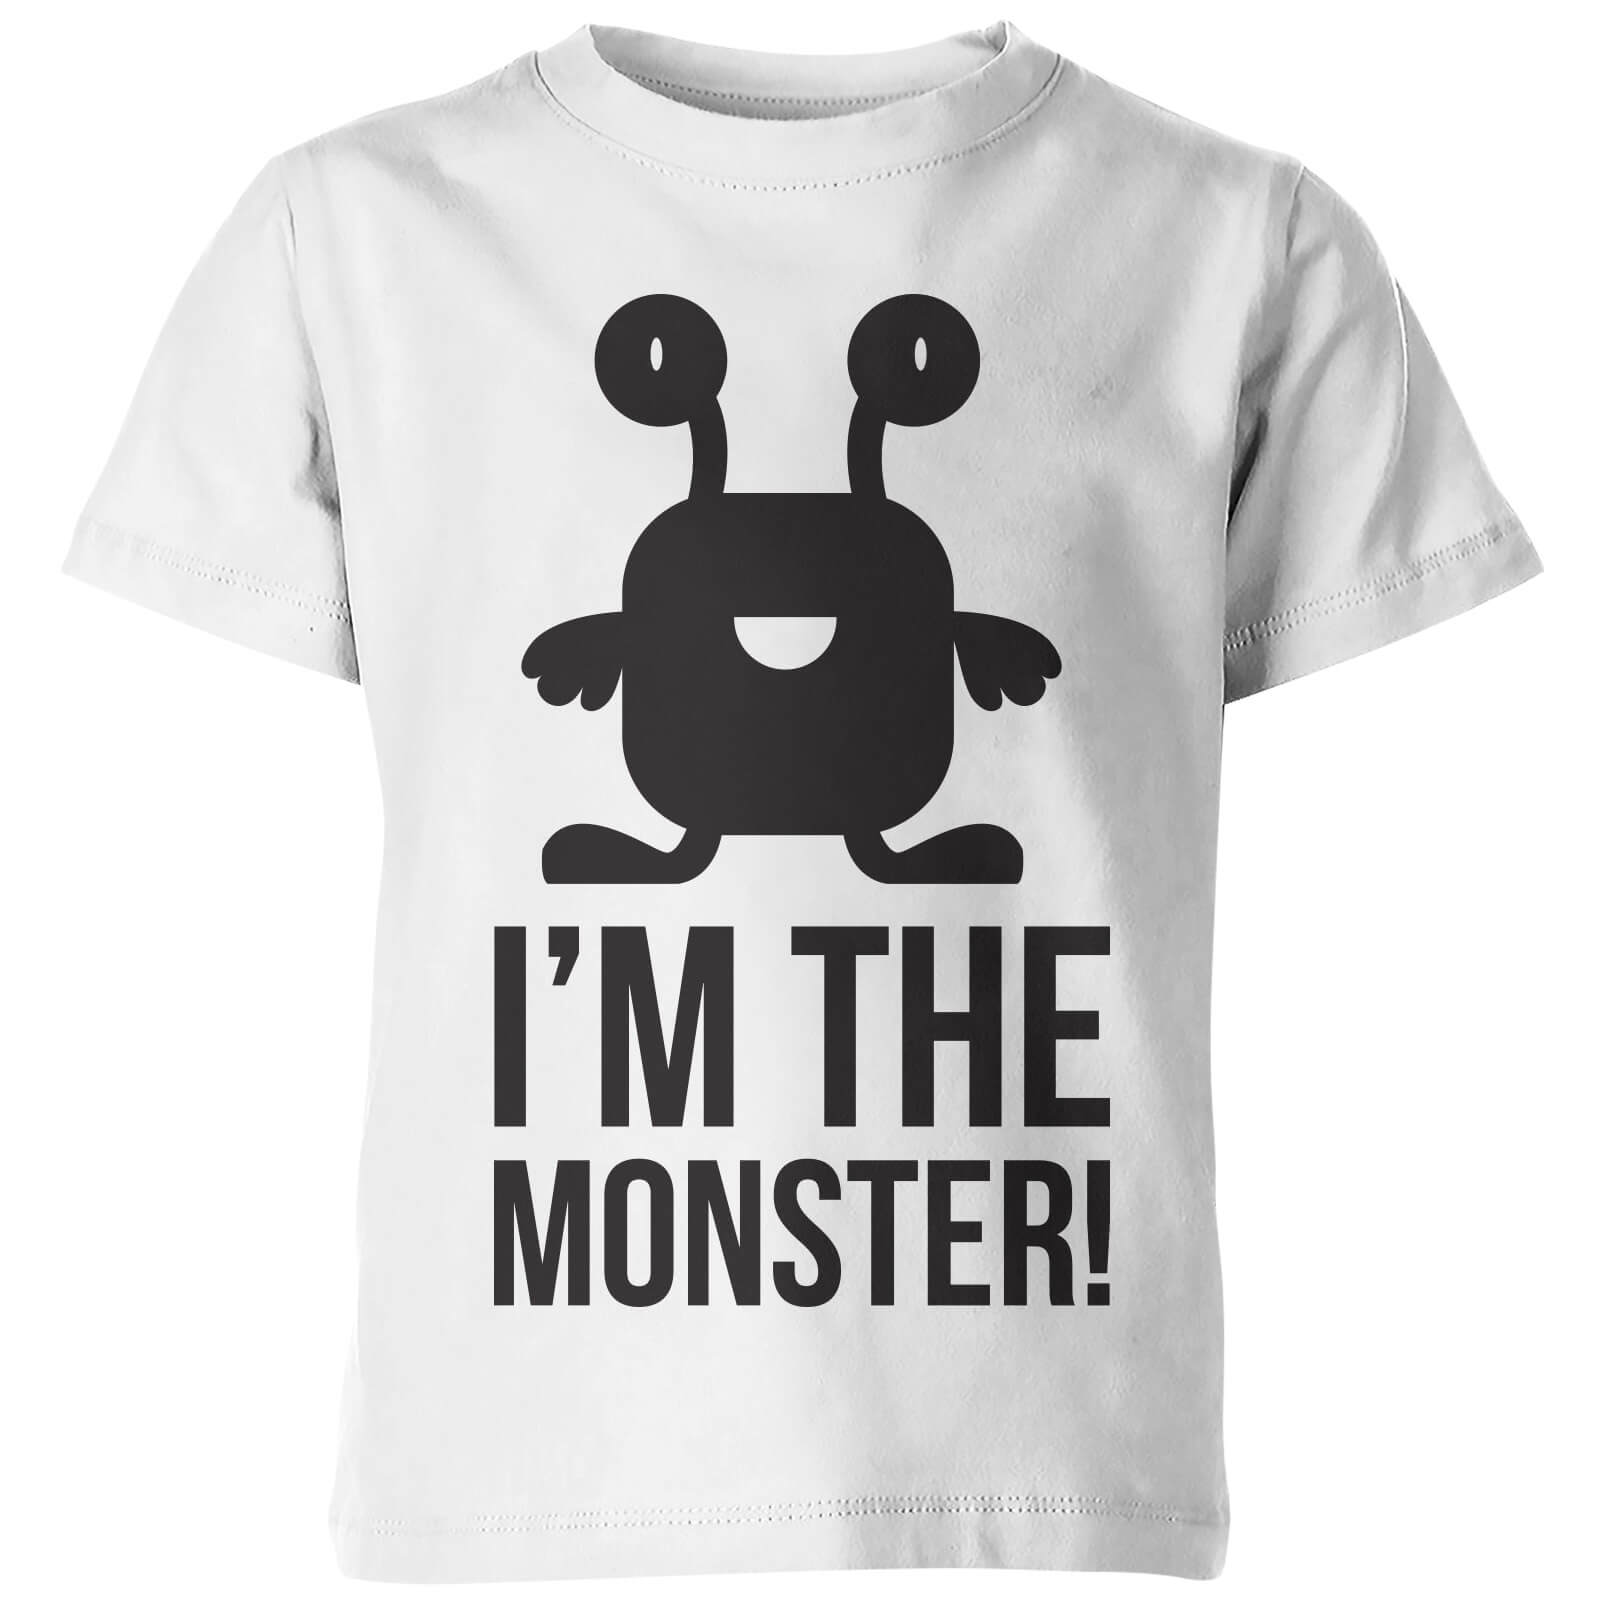 My Little Rascal Kids Im The Monster! White T Shirt   5 6 Years   Green